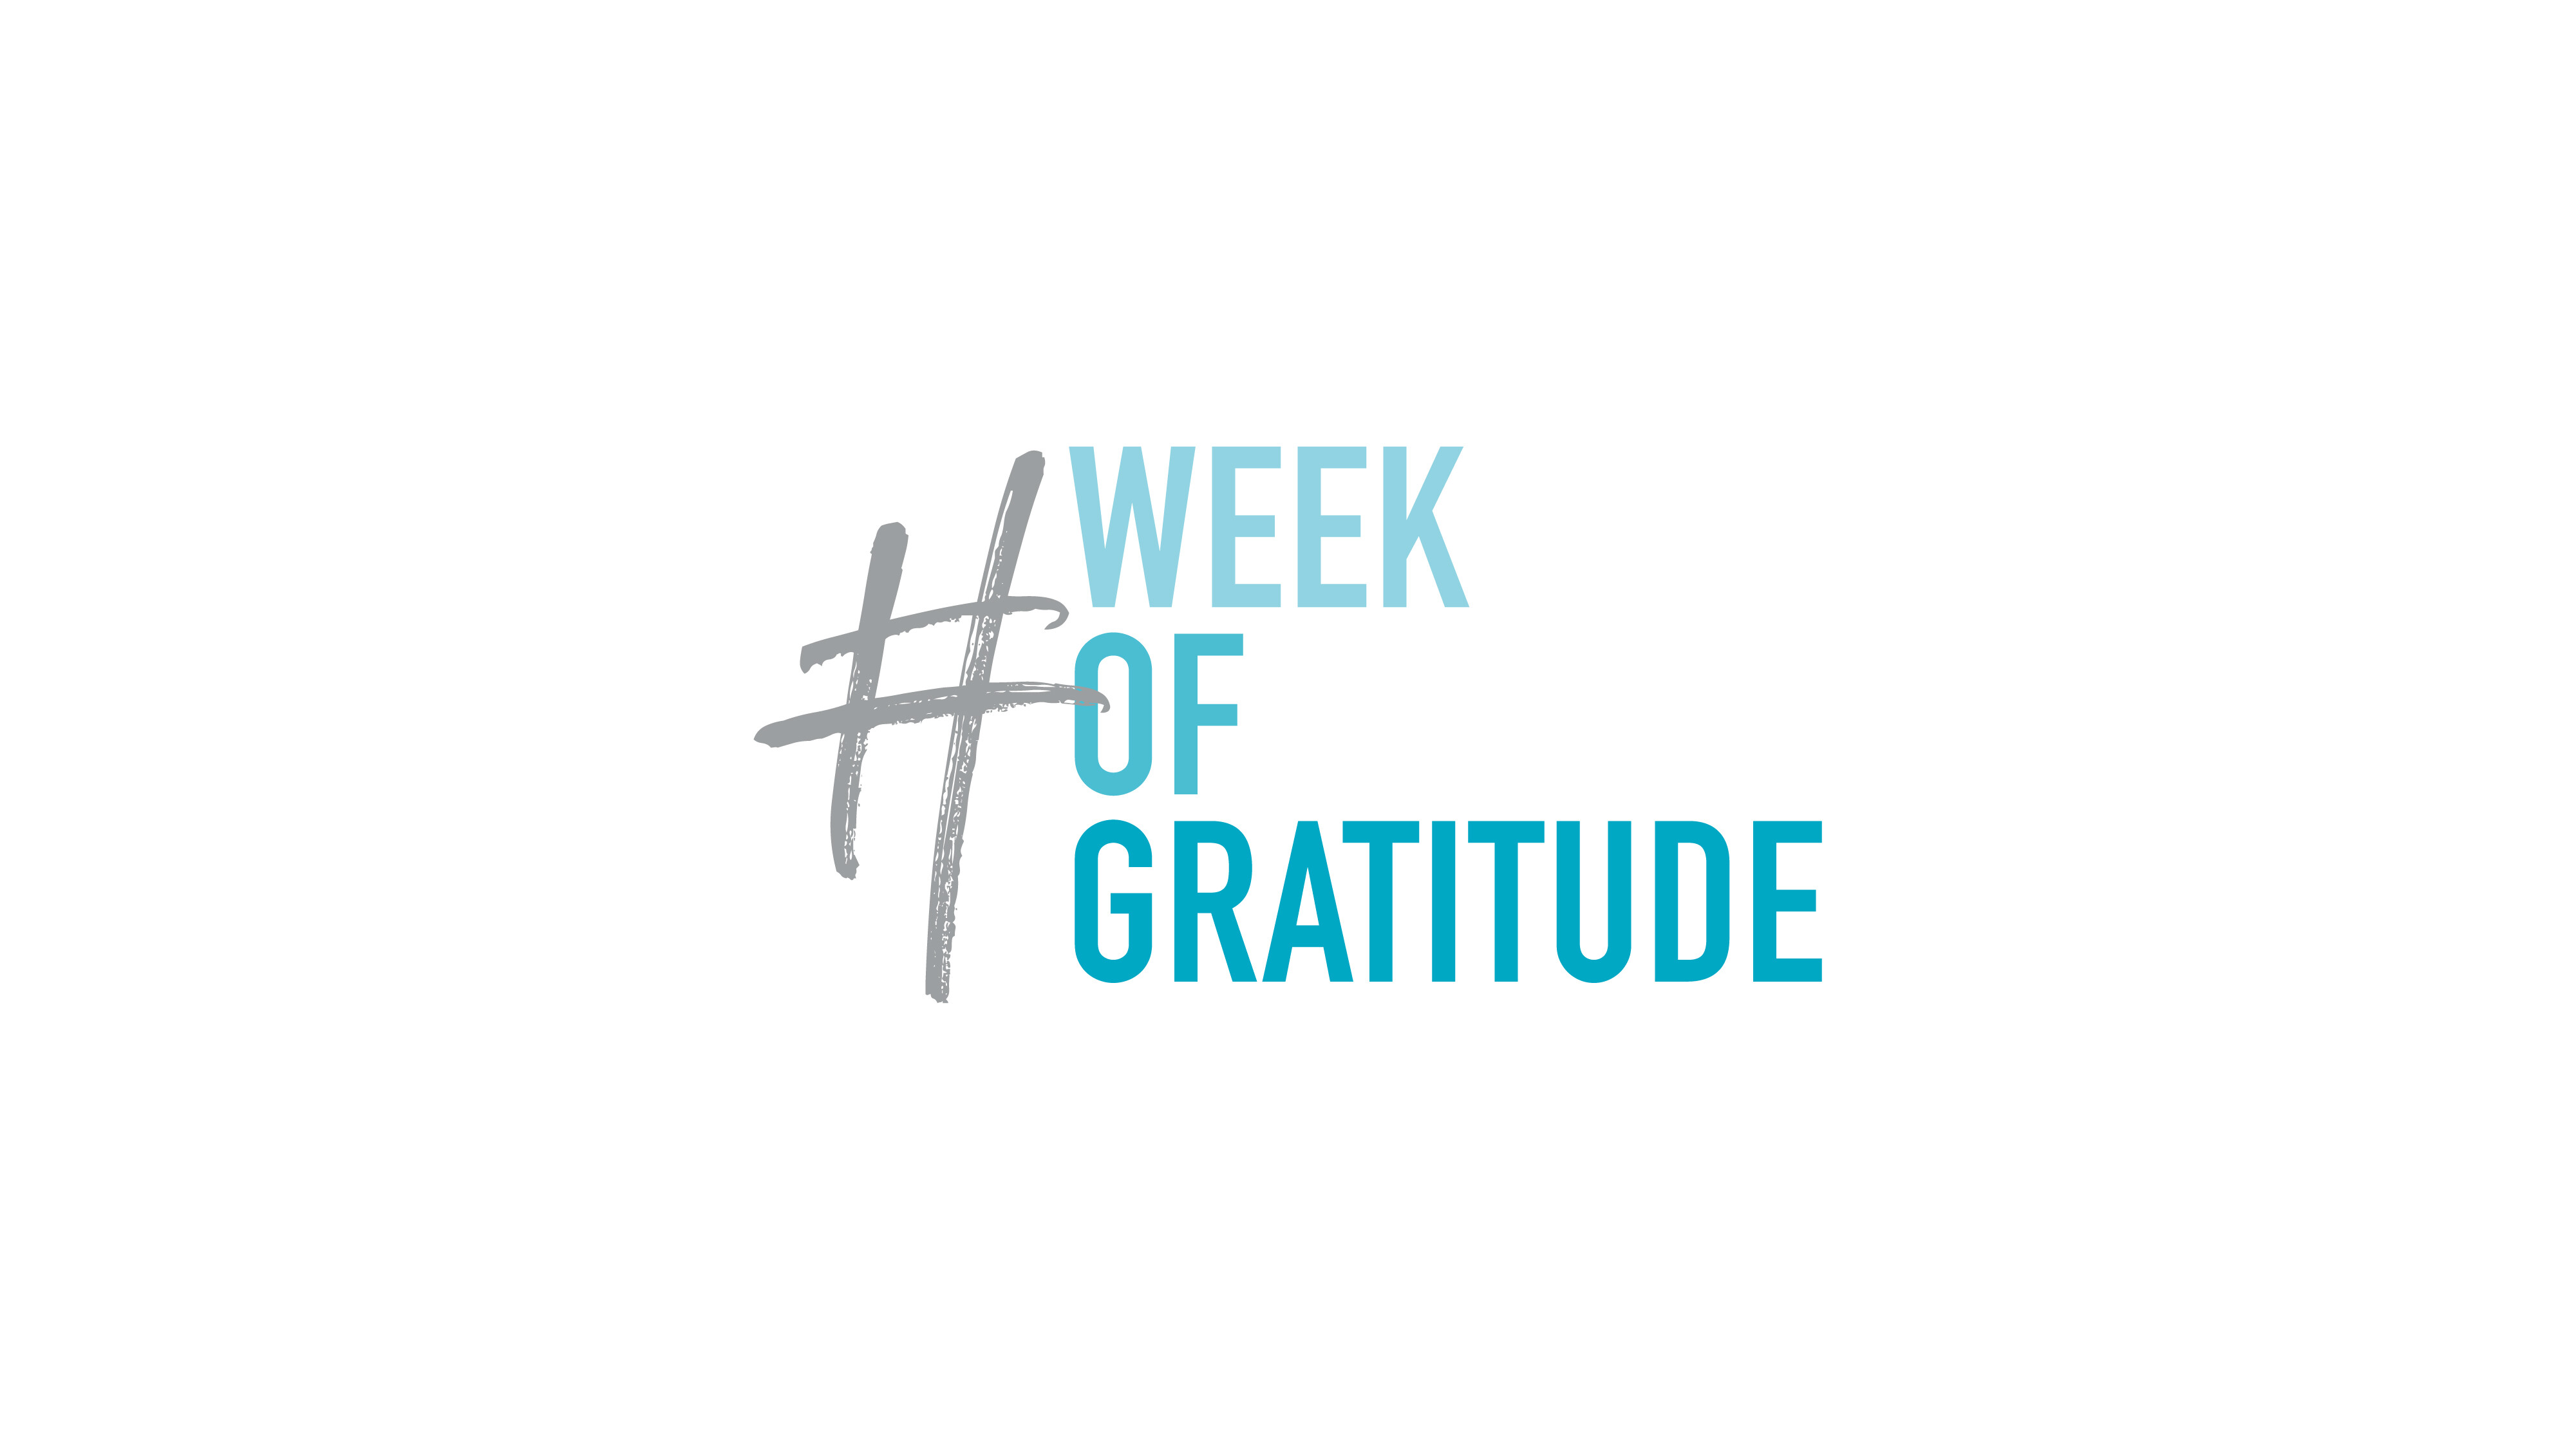 #Week of Gratitude